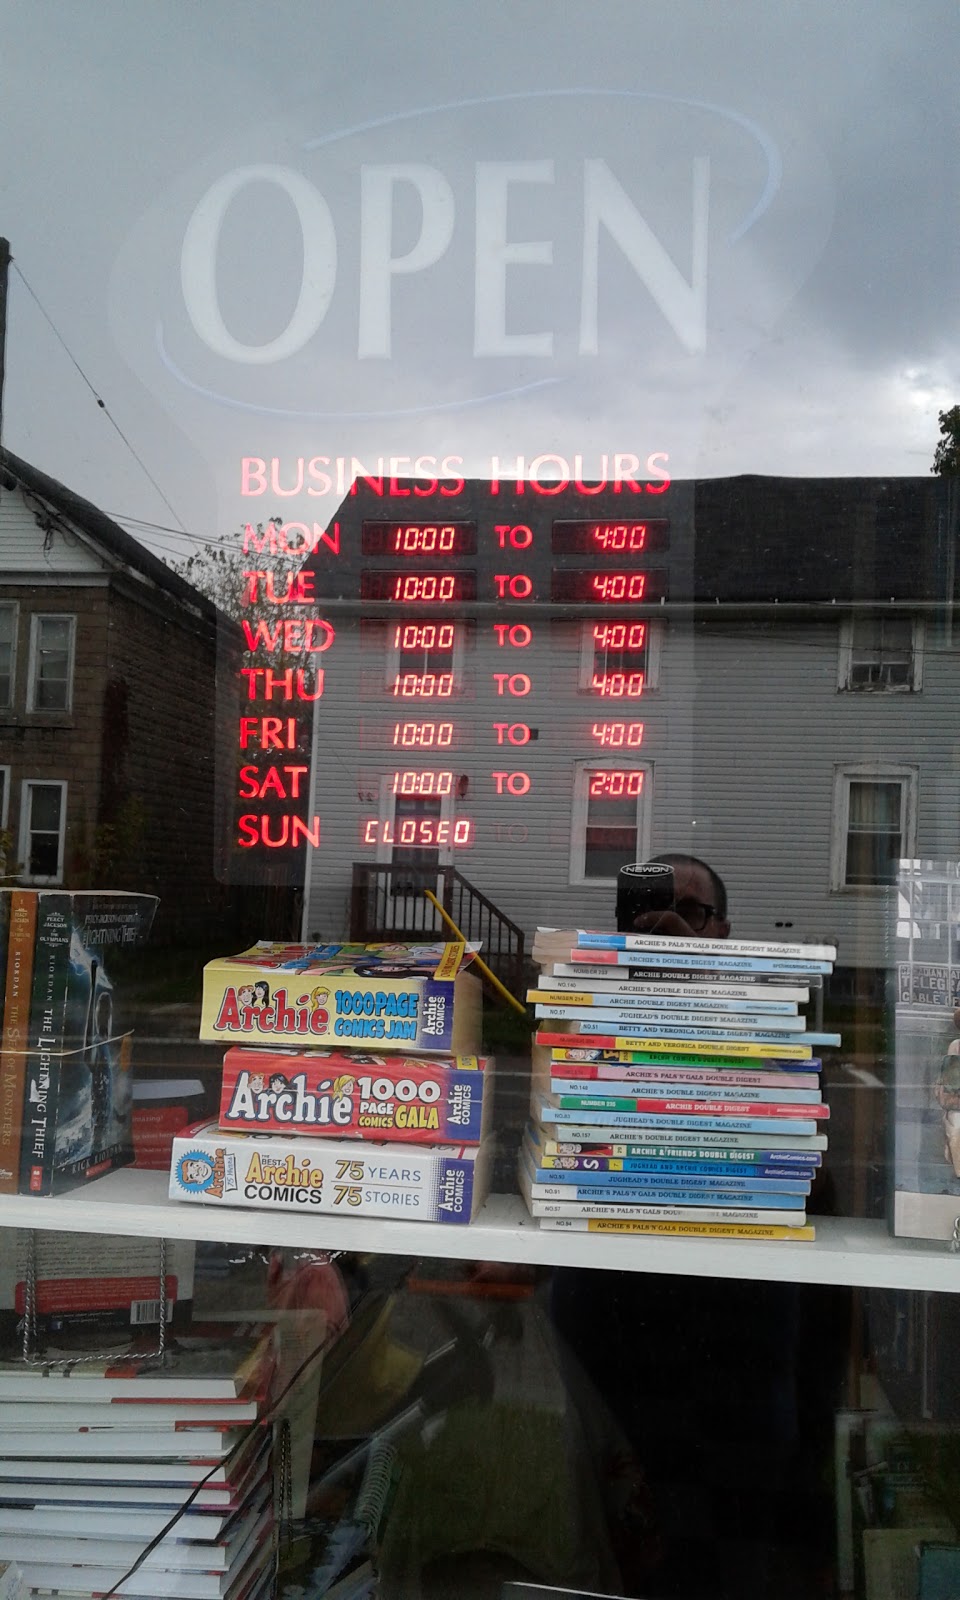 Arlies Books | 32 Market St N, Smiths Falls, ON K7A 2E6, Canada | Phone: (613) 283-0116